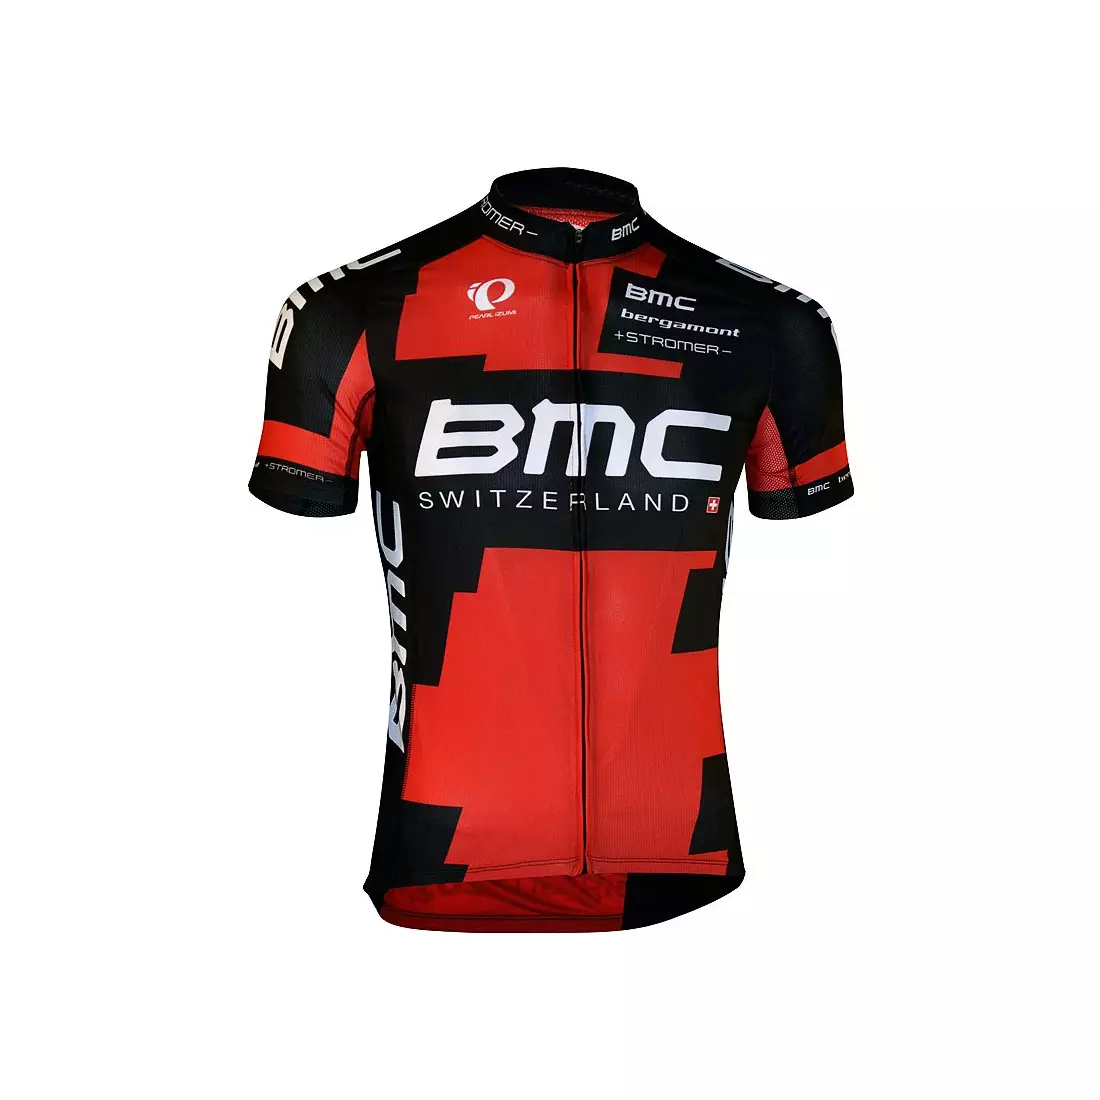 PEARL IZUMI ELITE BMC 2014 - men's cycling jersey 11121371-4JZ